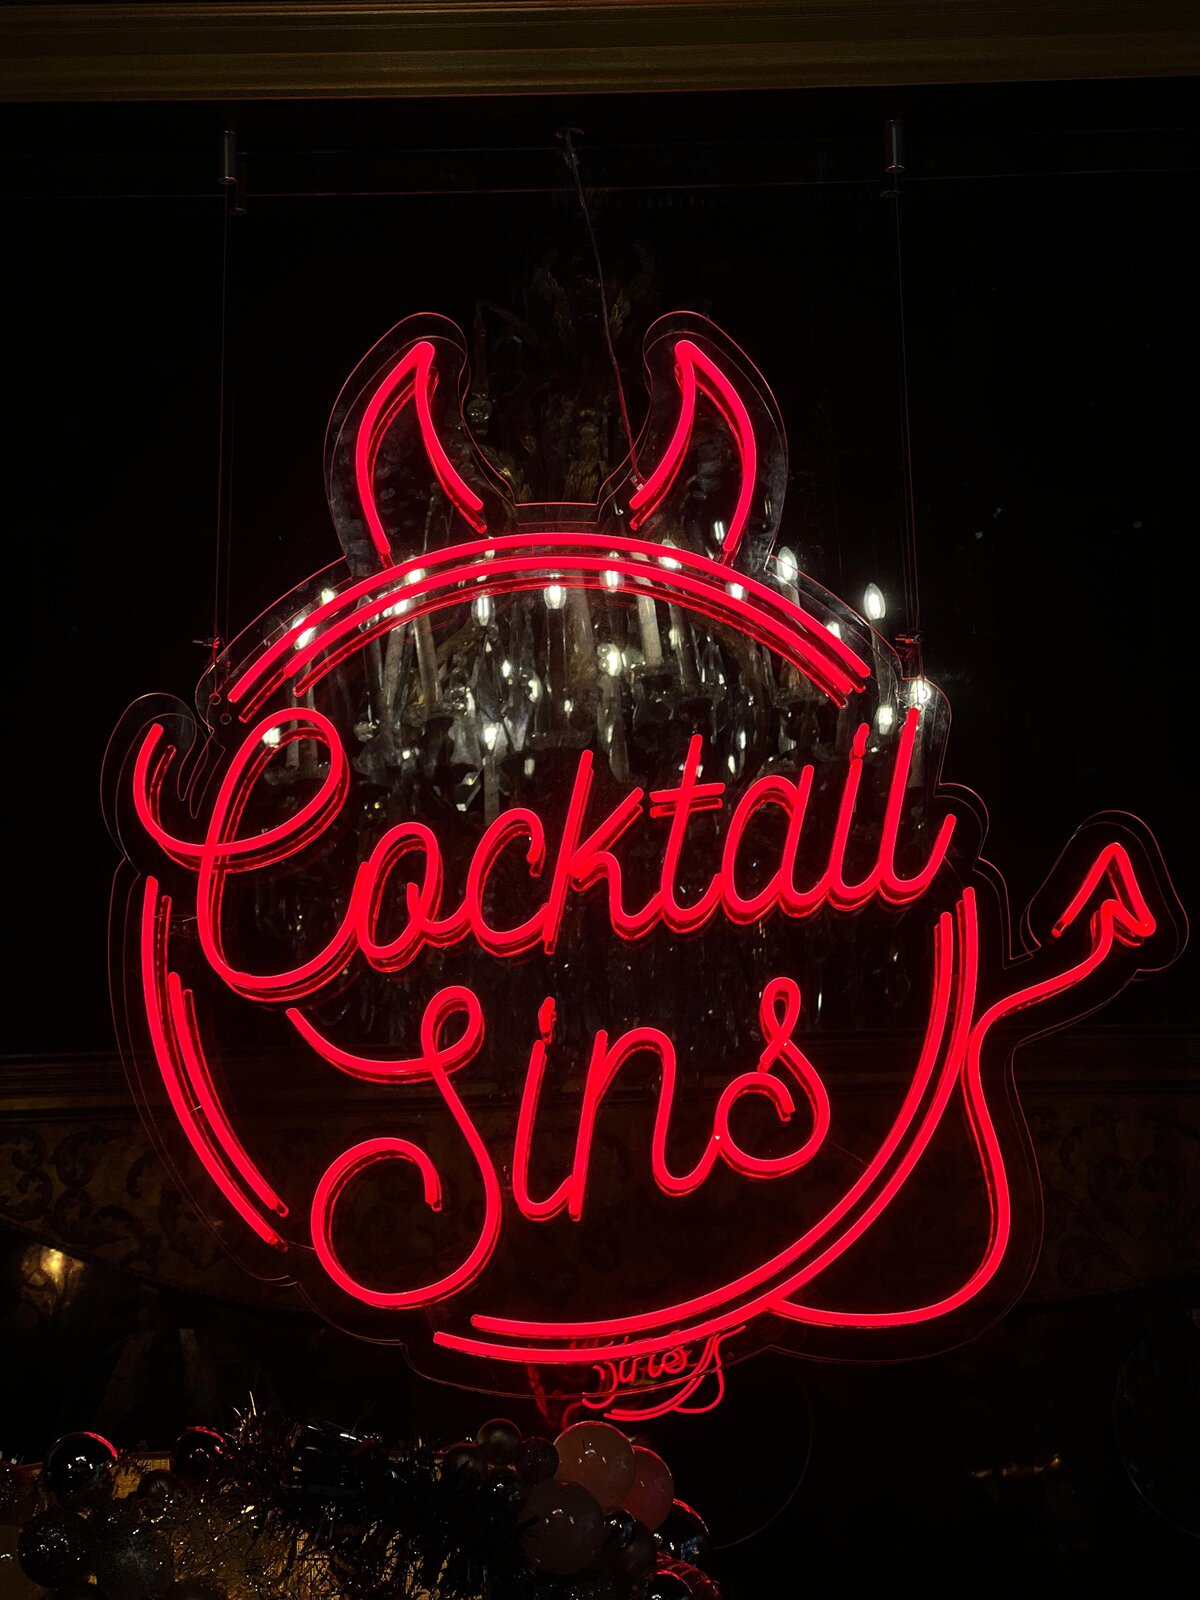 ellis-signs-cocktail-bar-neon-sign-newcastle-gateshead-north-east